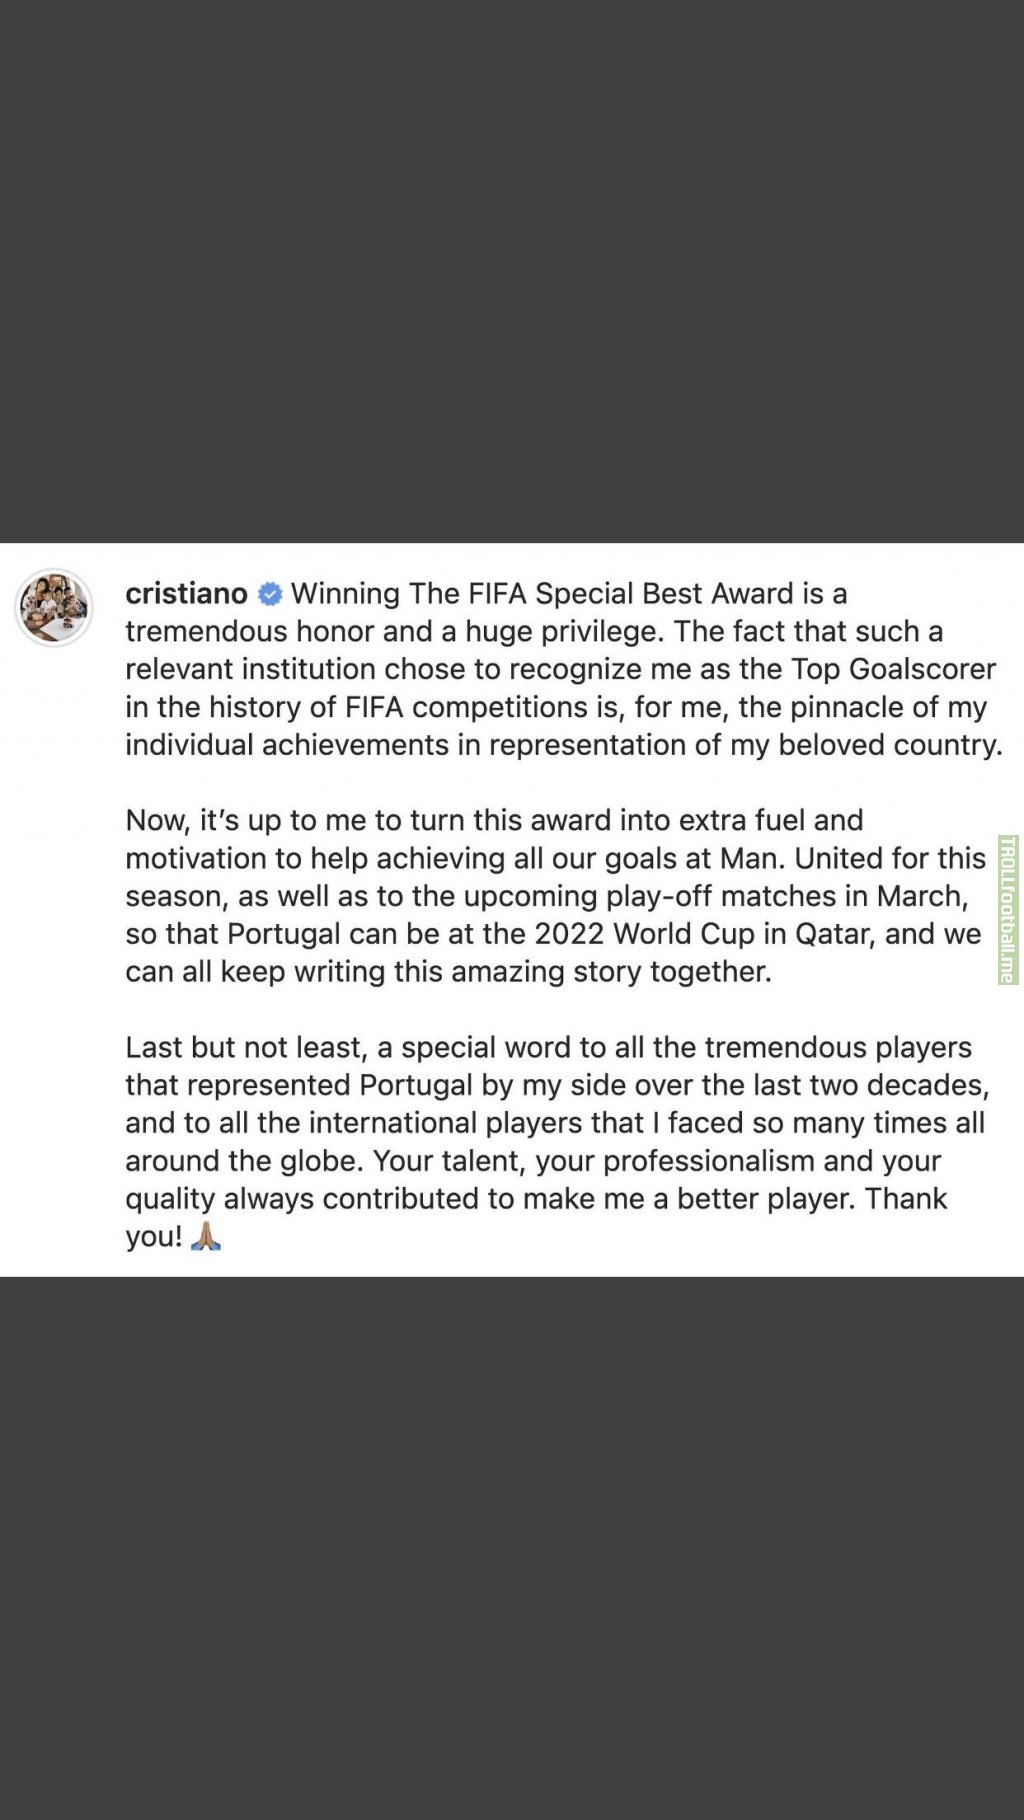 [C. Ronaldo on Instagram] Winning The FIFA Special Best Award